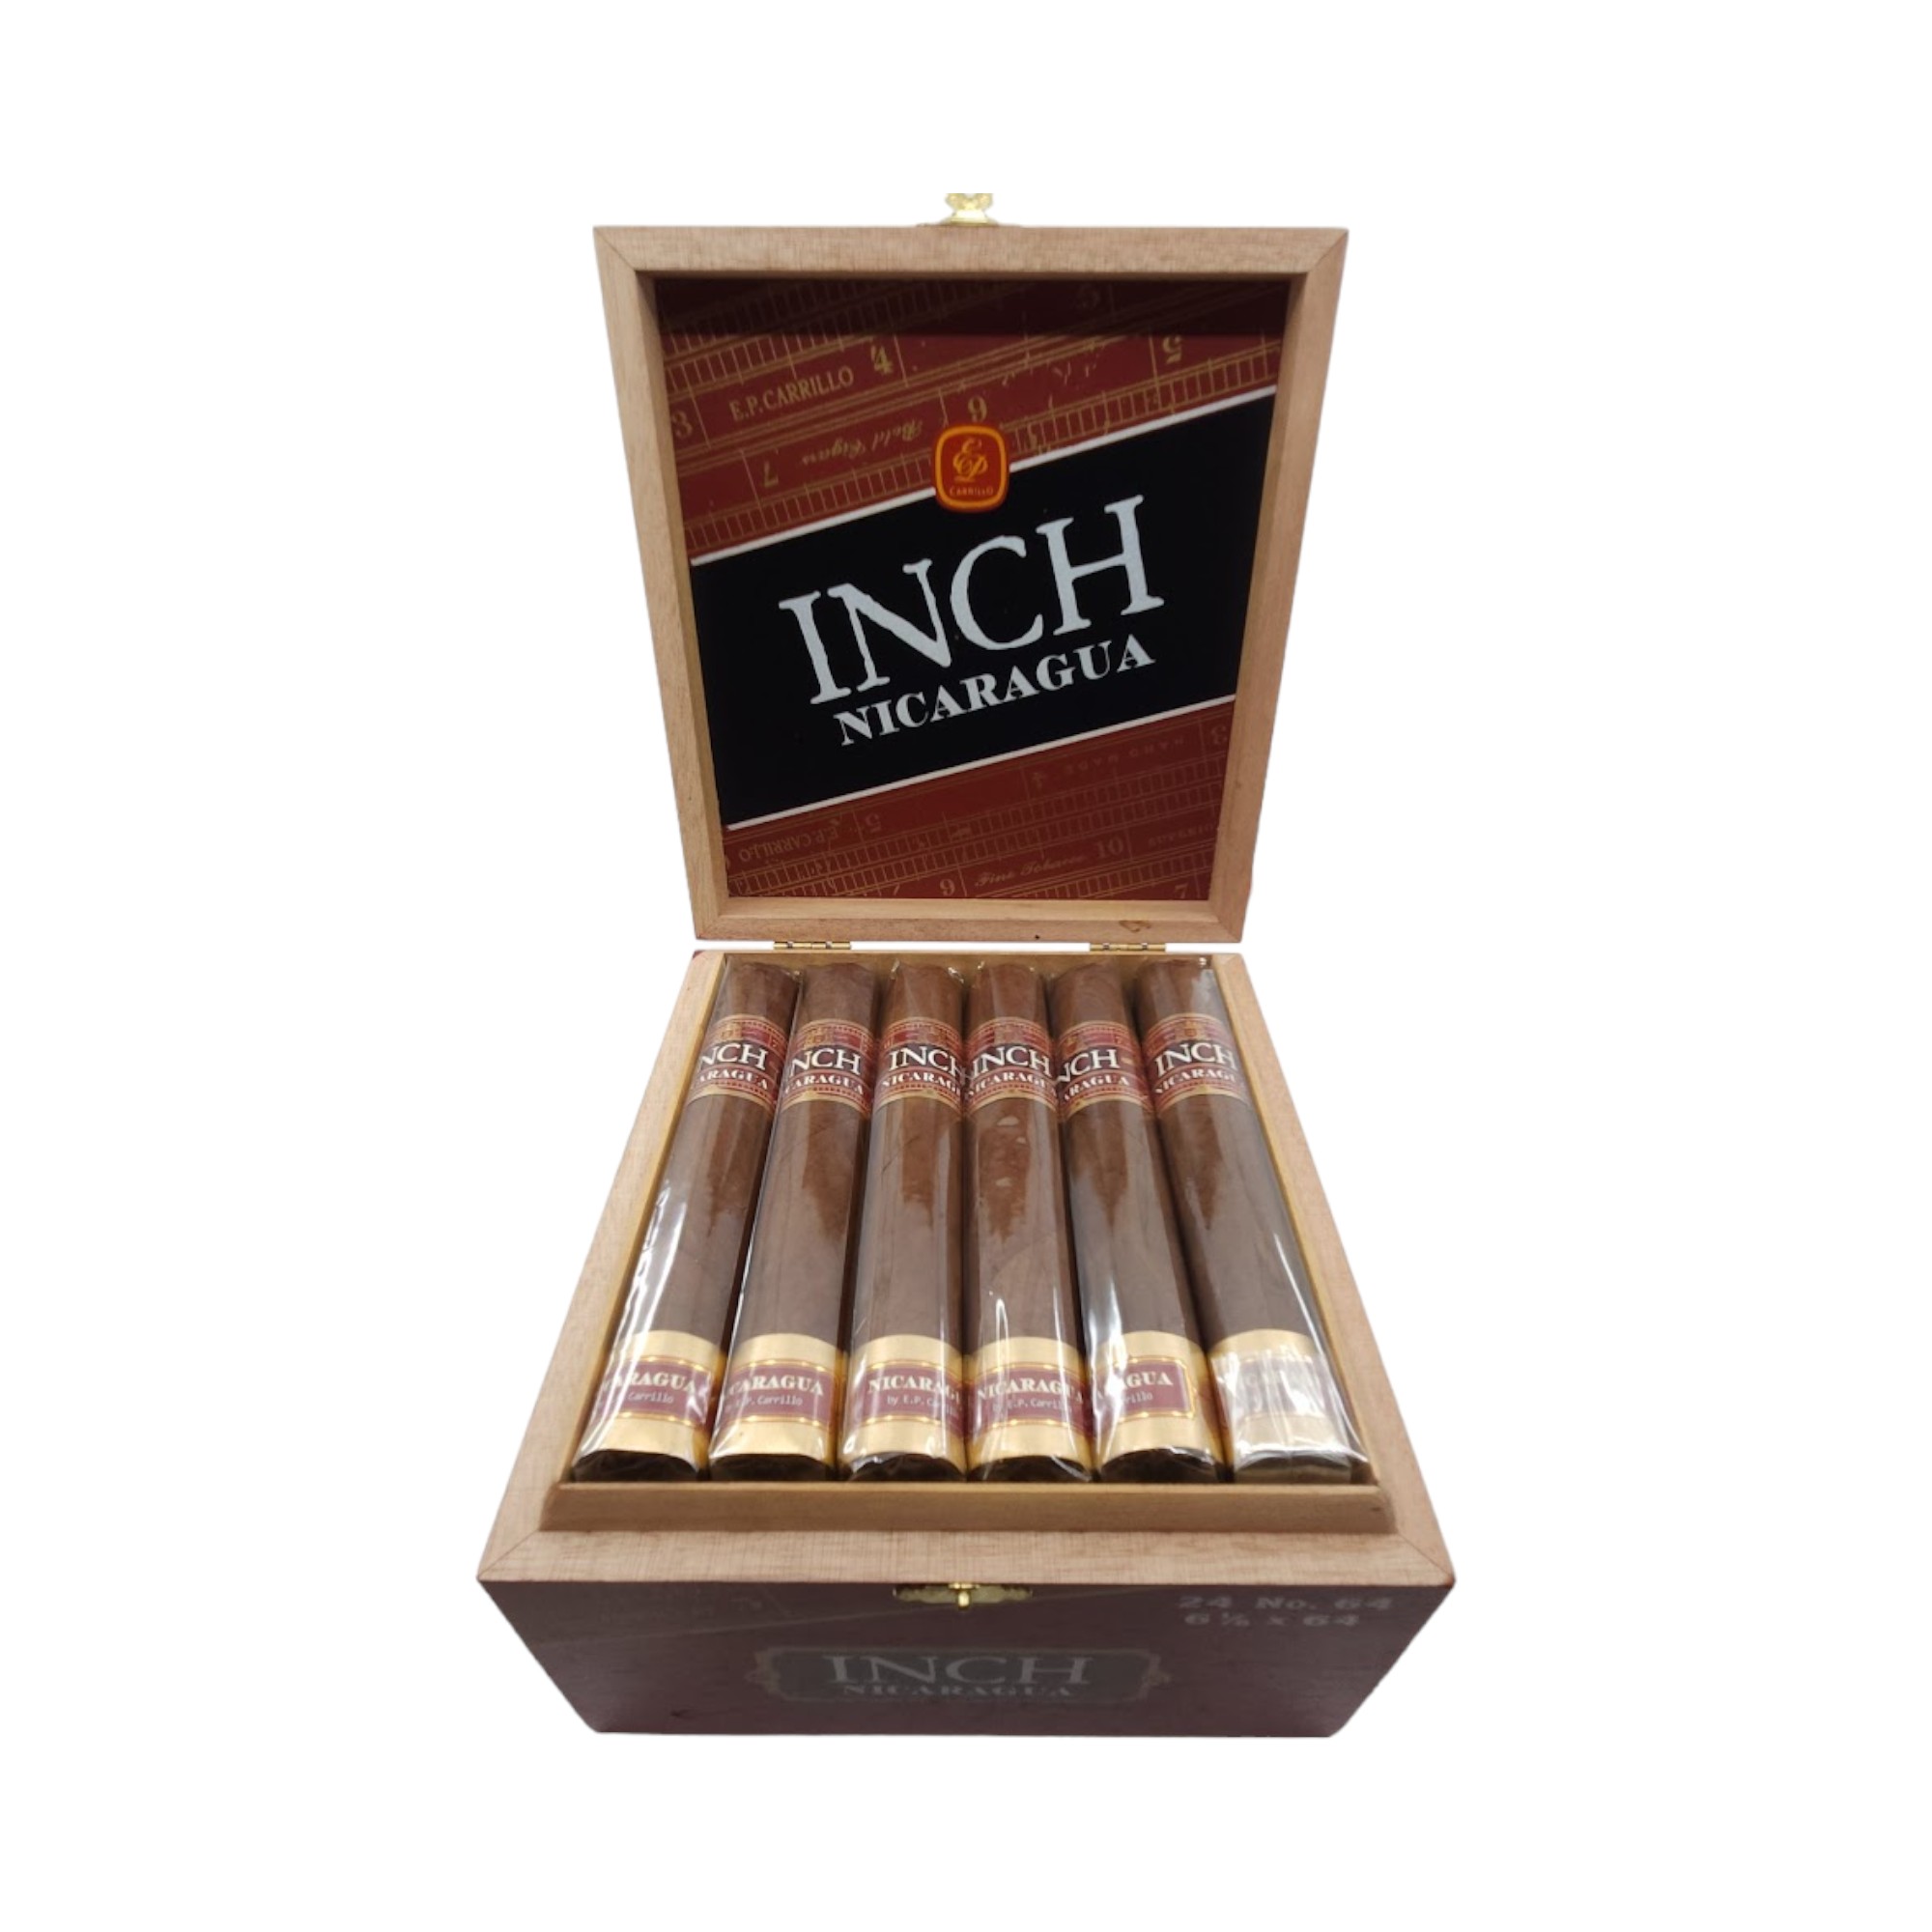 INCH Nicaragua No.64 Box 24